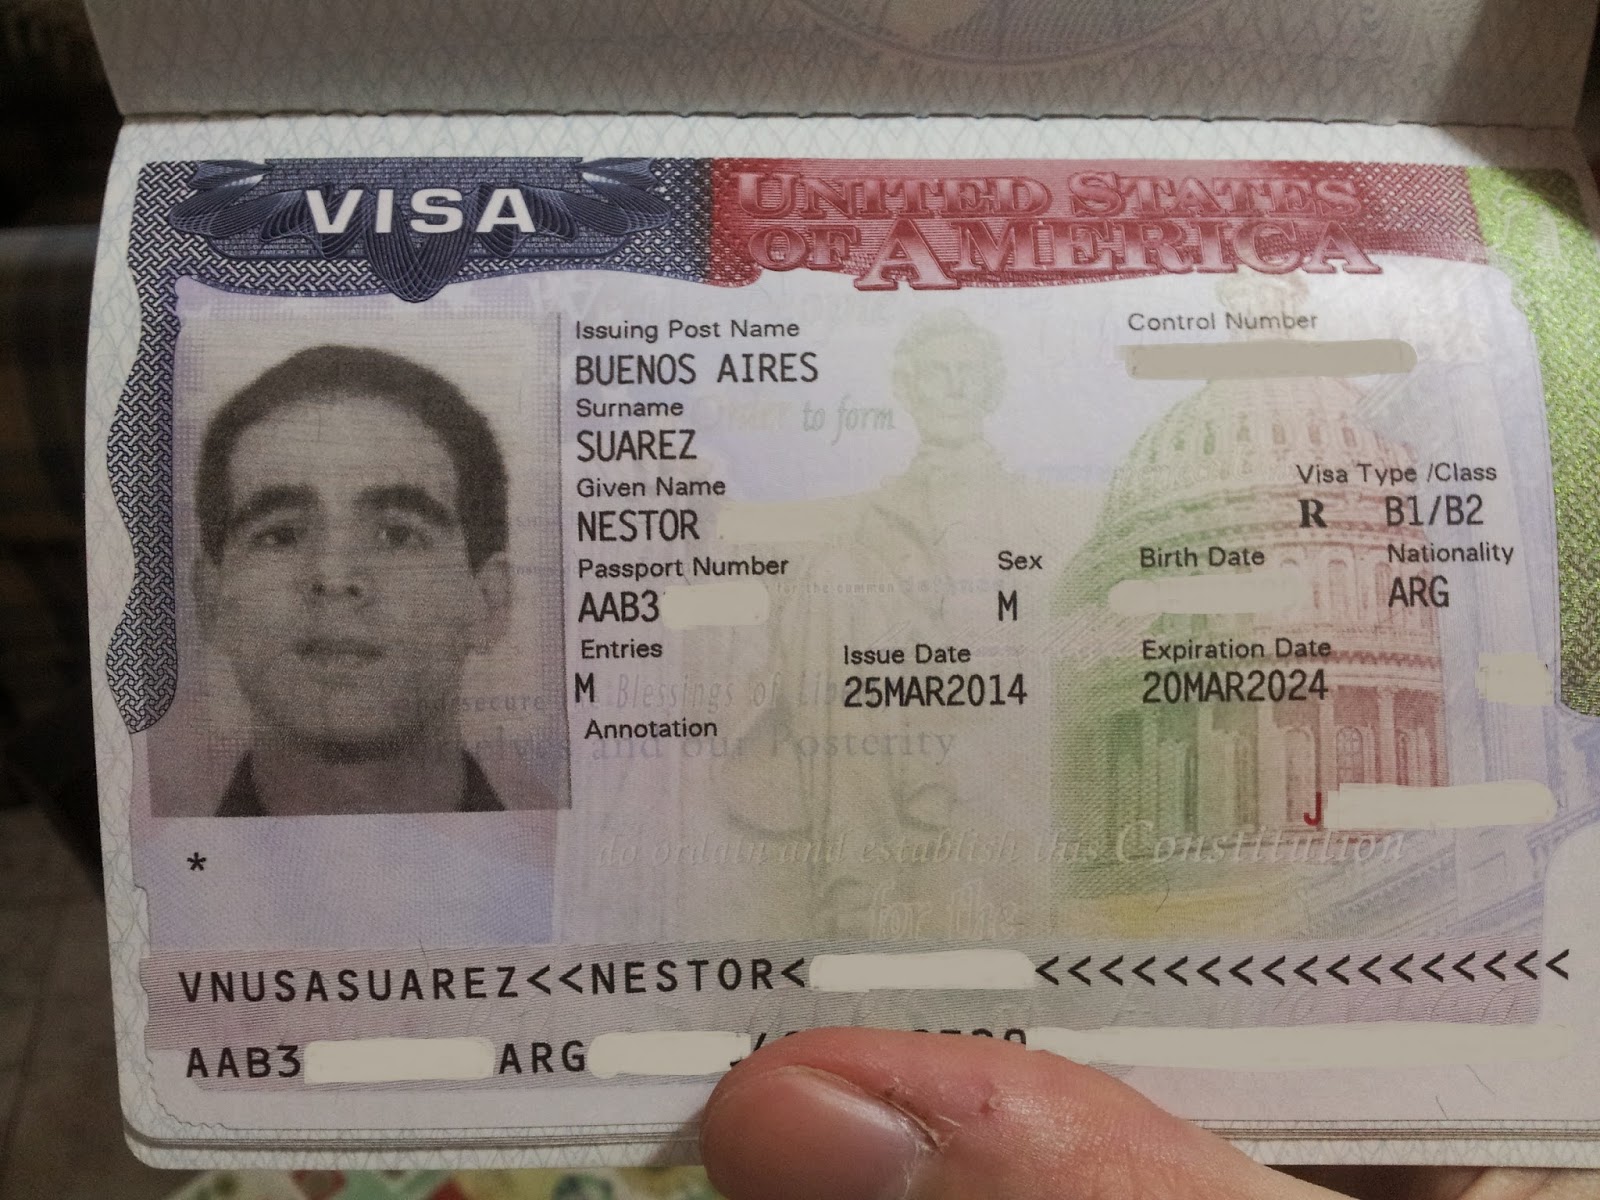 Visa type. Visa Americana. Рабочая виза в США. USA b1 b2 visa. USA visa Types class.